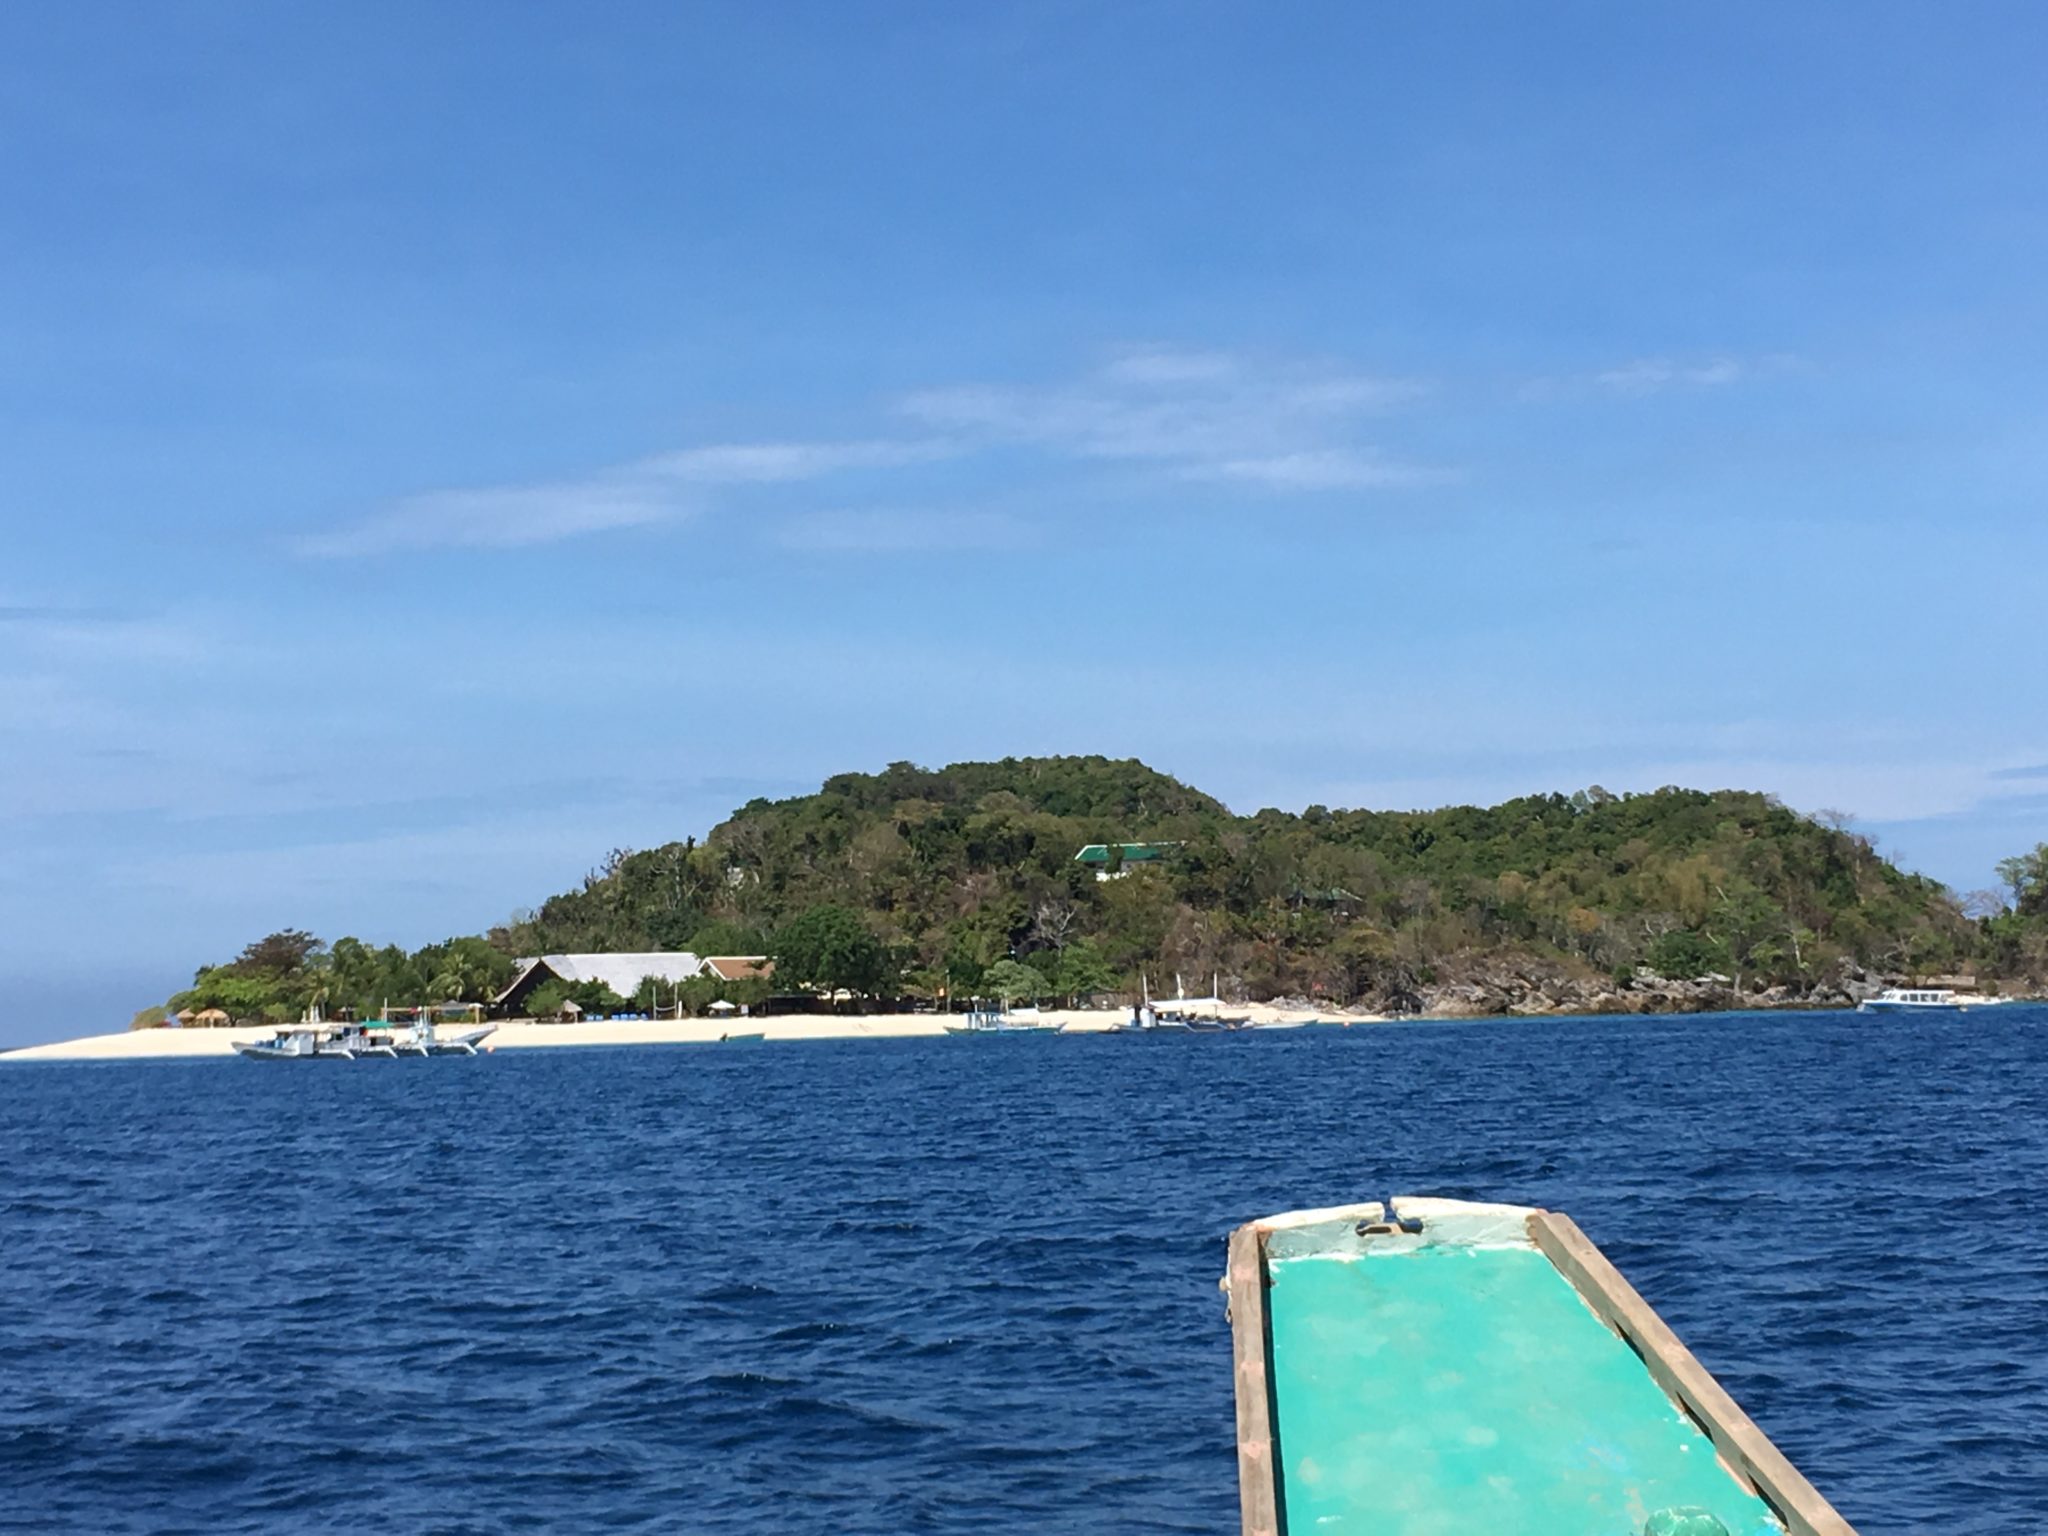 Club Paradise Palawan - From the boat